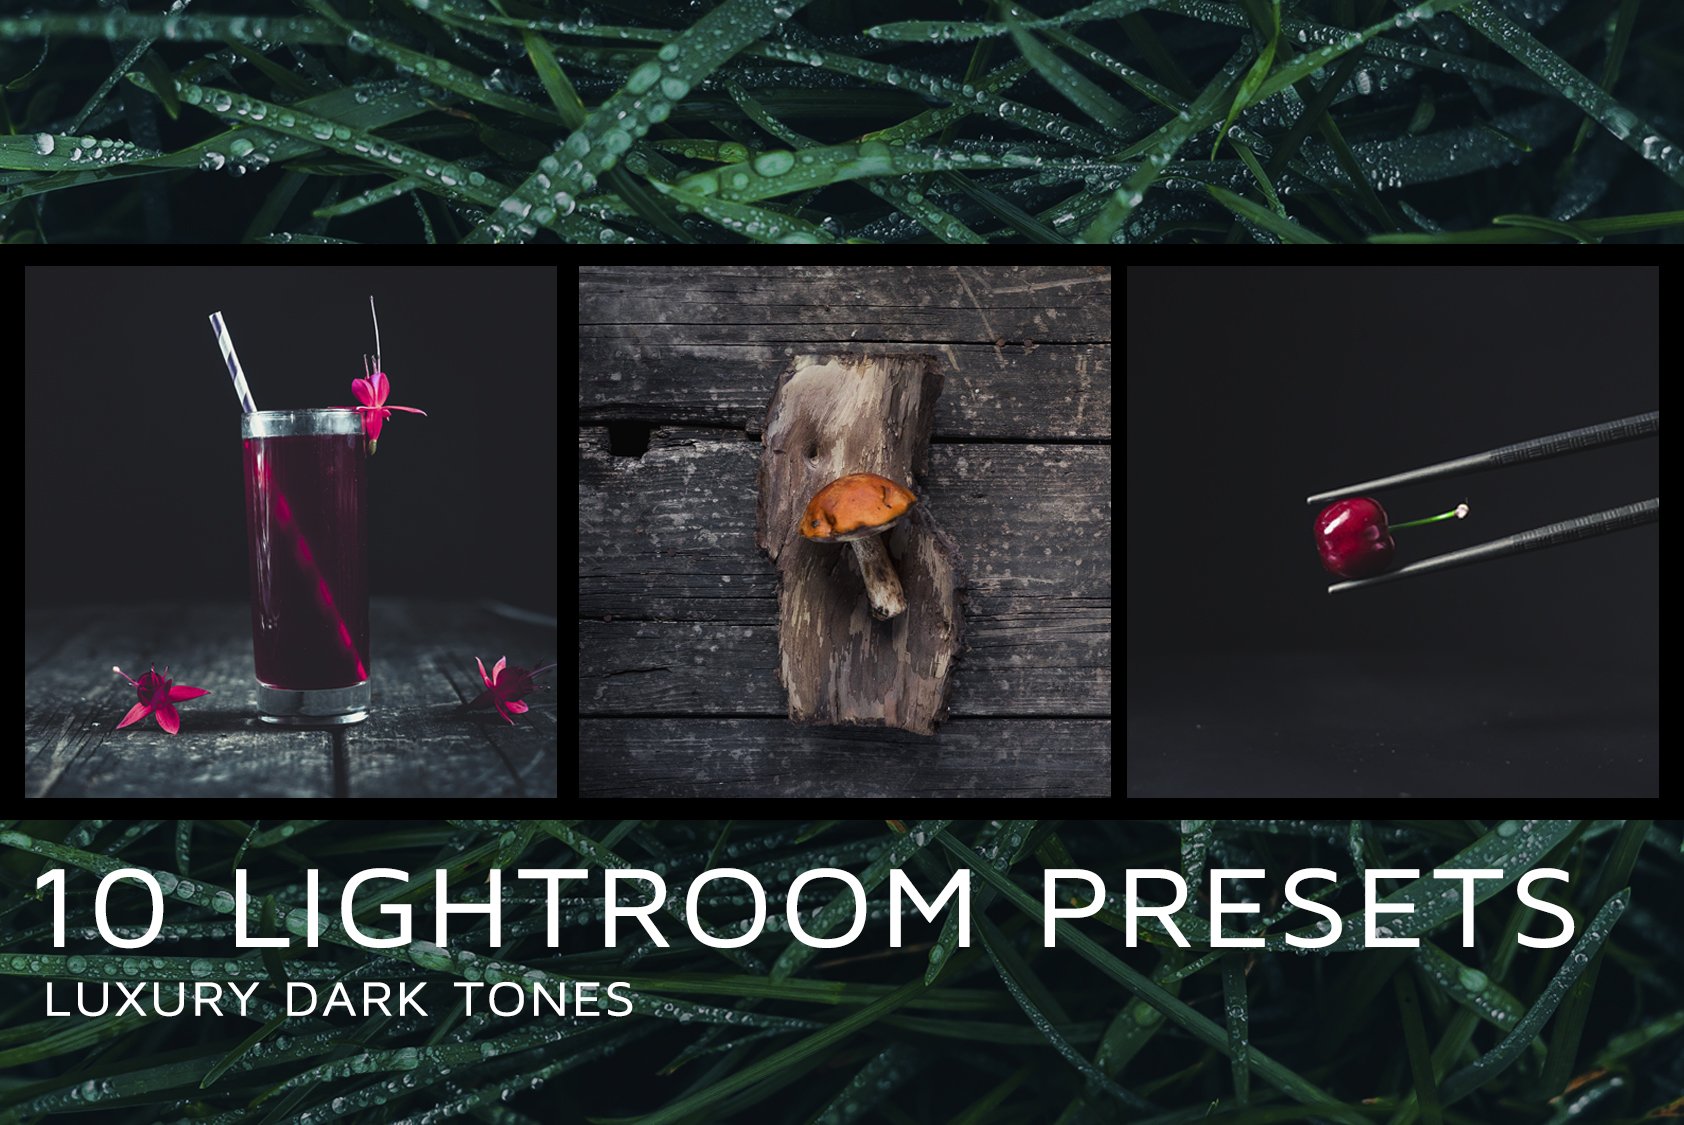 10 Dark tones presets for Lightroomcover image.